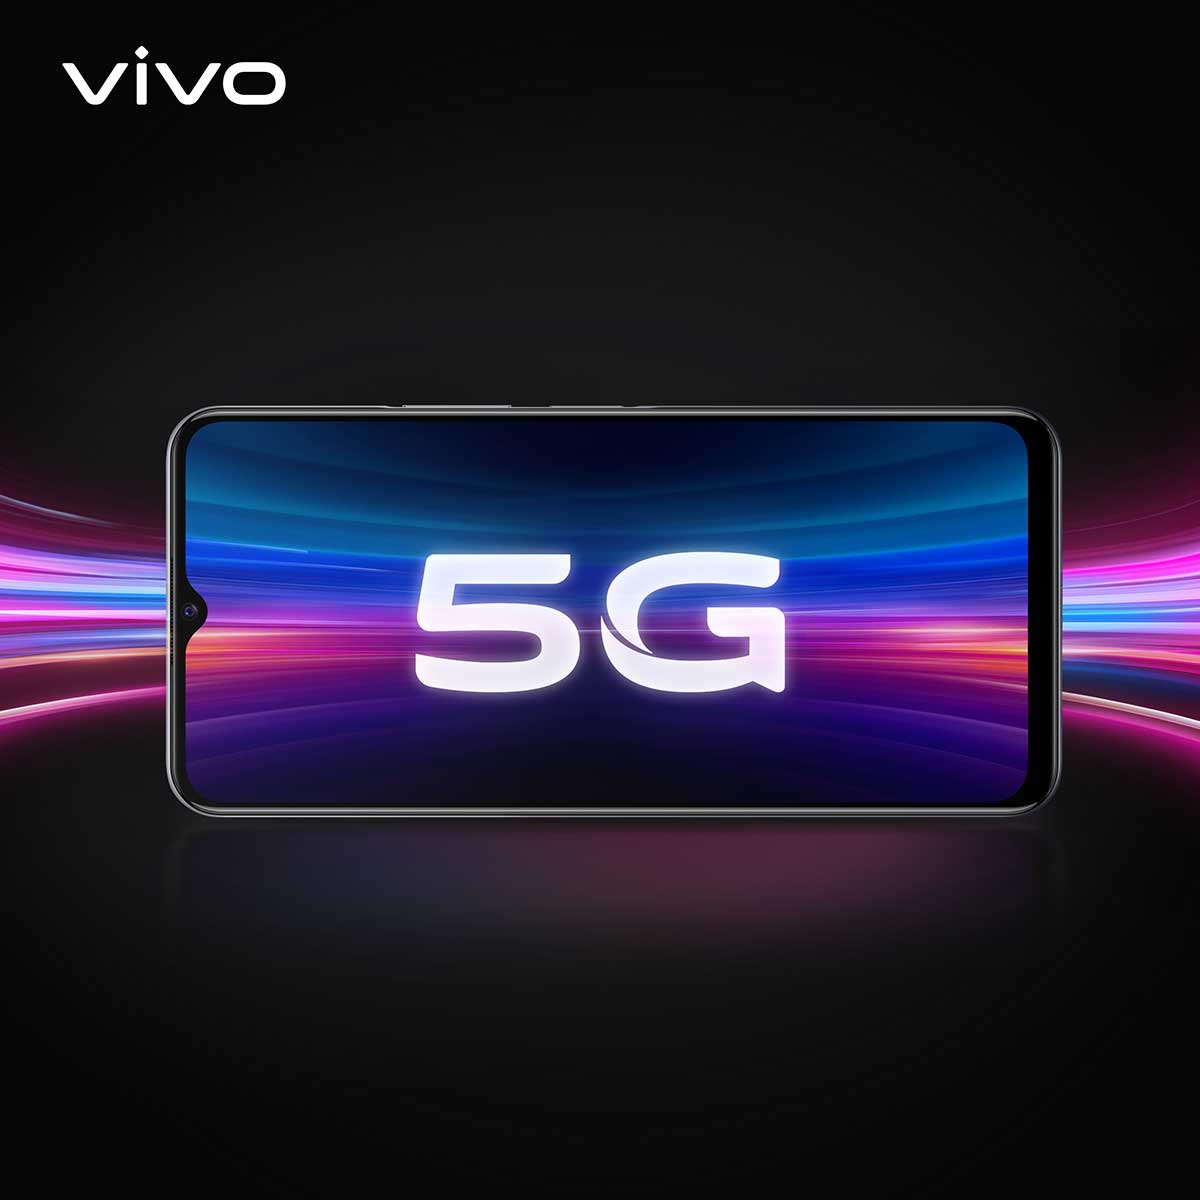 Vivo แบรนด์สมาร์ตโฟนชั้นนำระดับโลก 5 เหตุผลสำคัญที่เทคโนโลยีการเชื่อมต่อ 5G